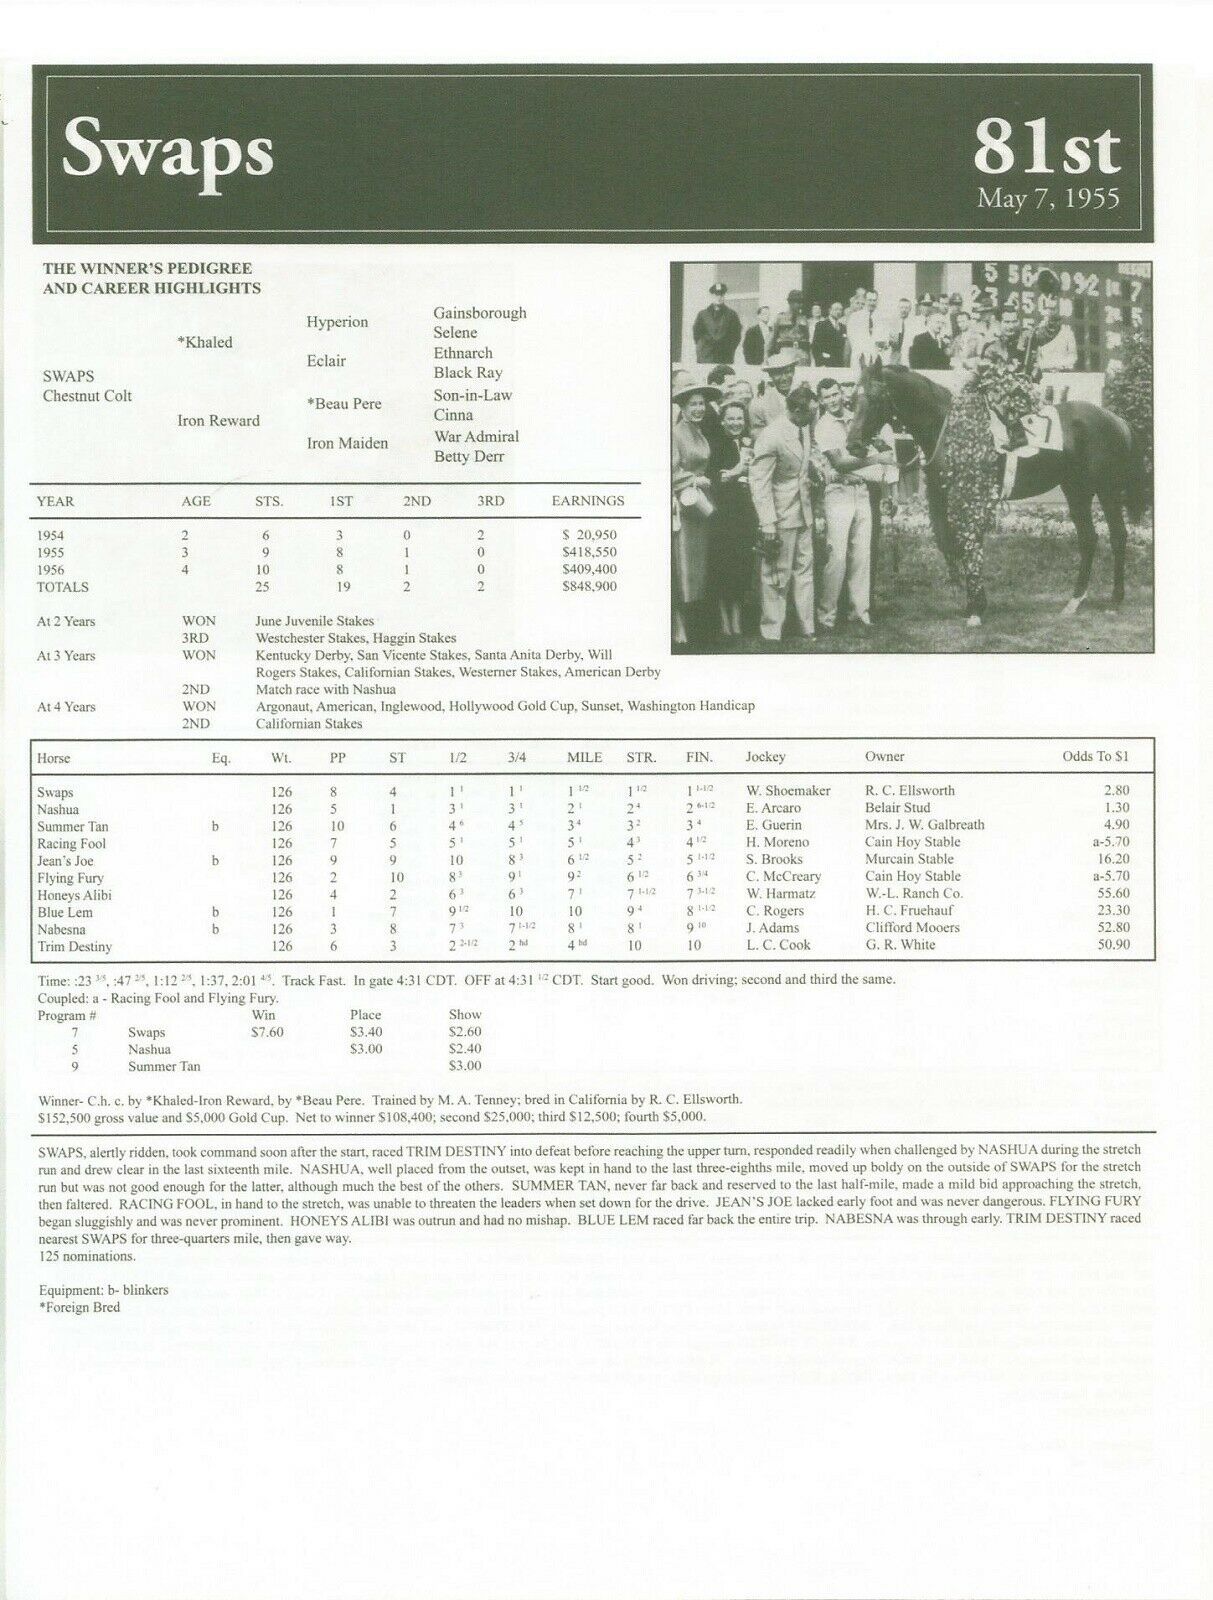 1955 SWAPS Kentucky Derby Race Chart, Pedigree & Career Highlights